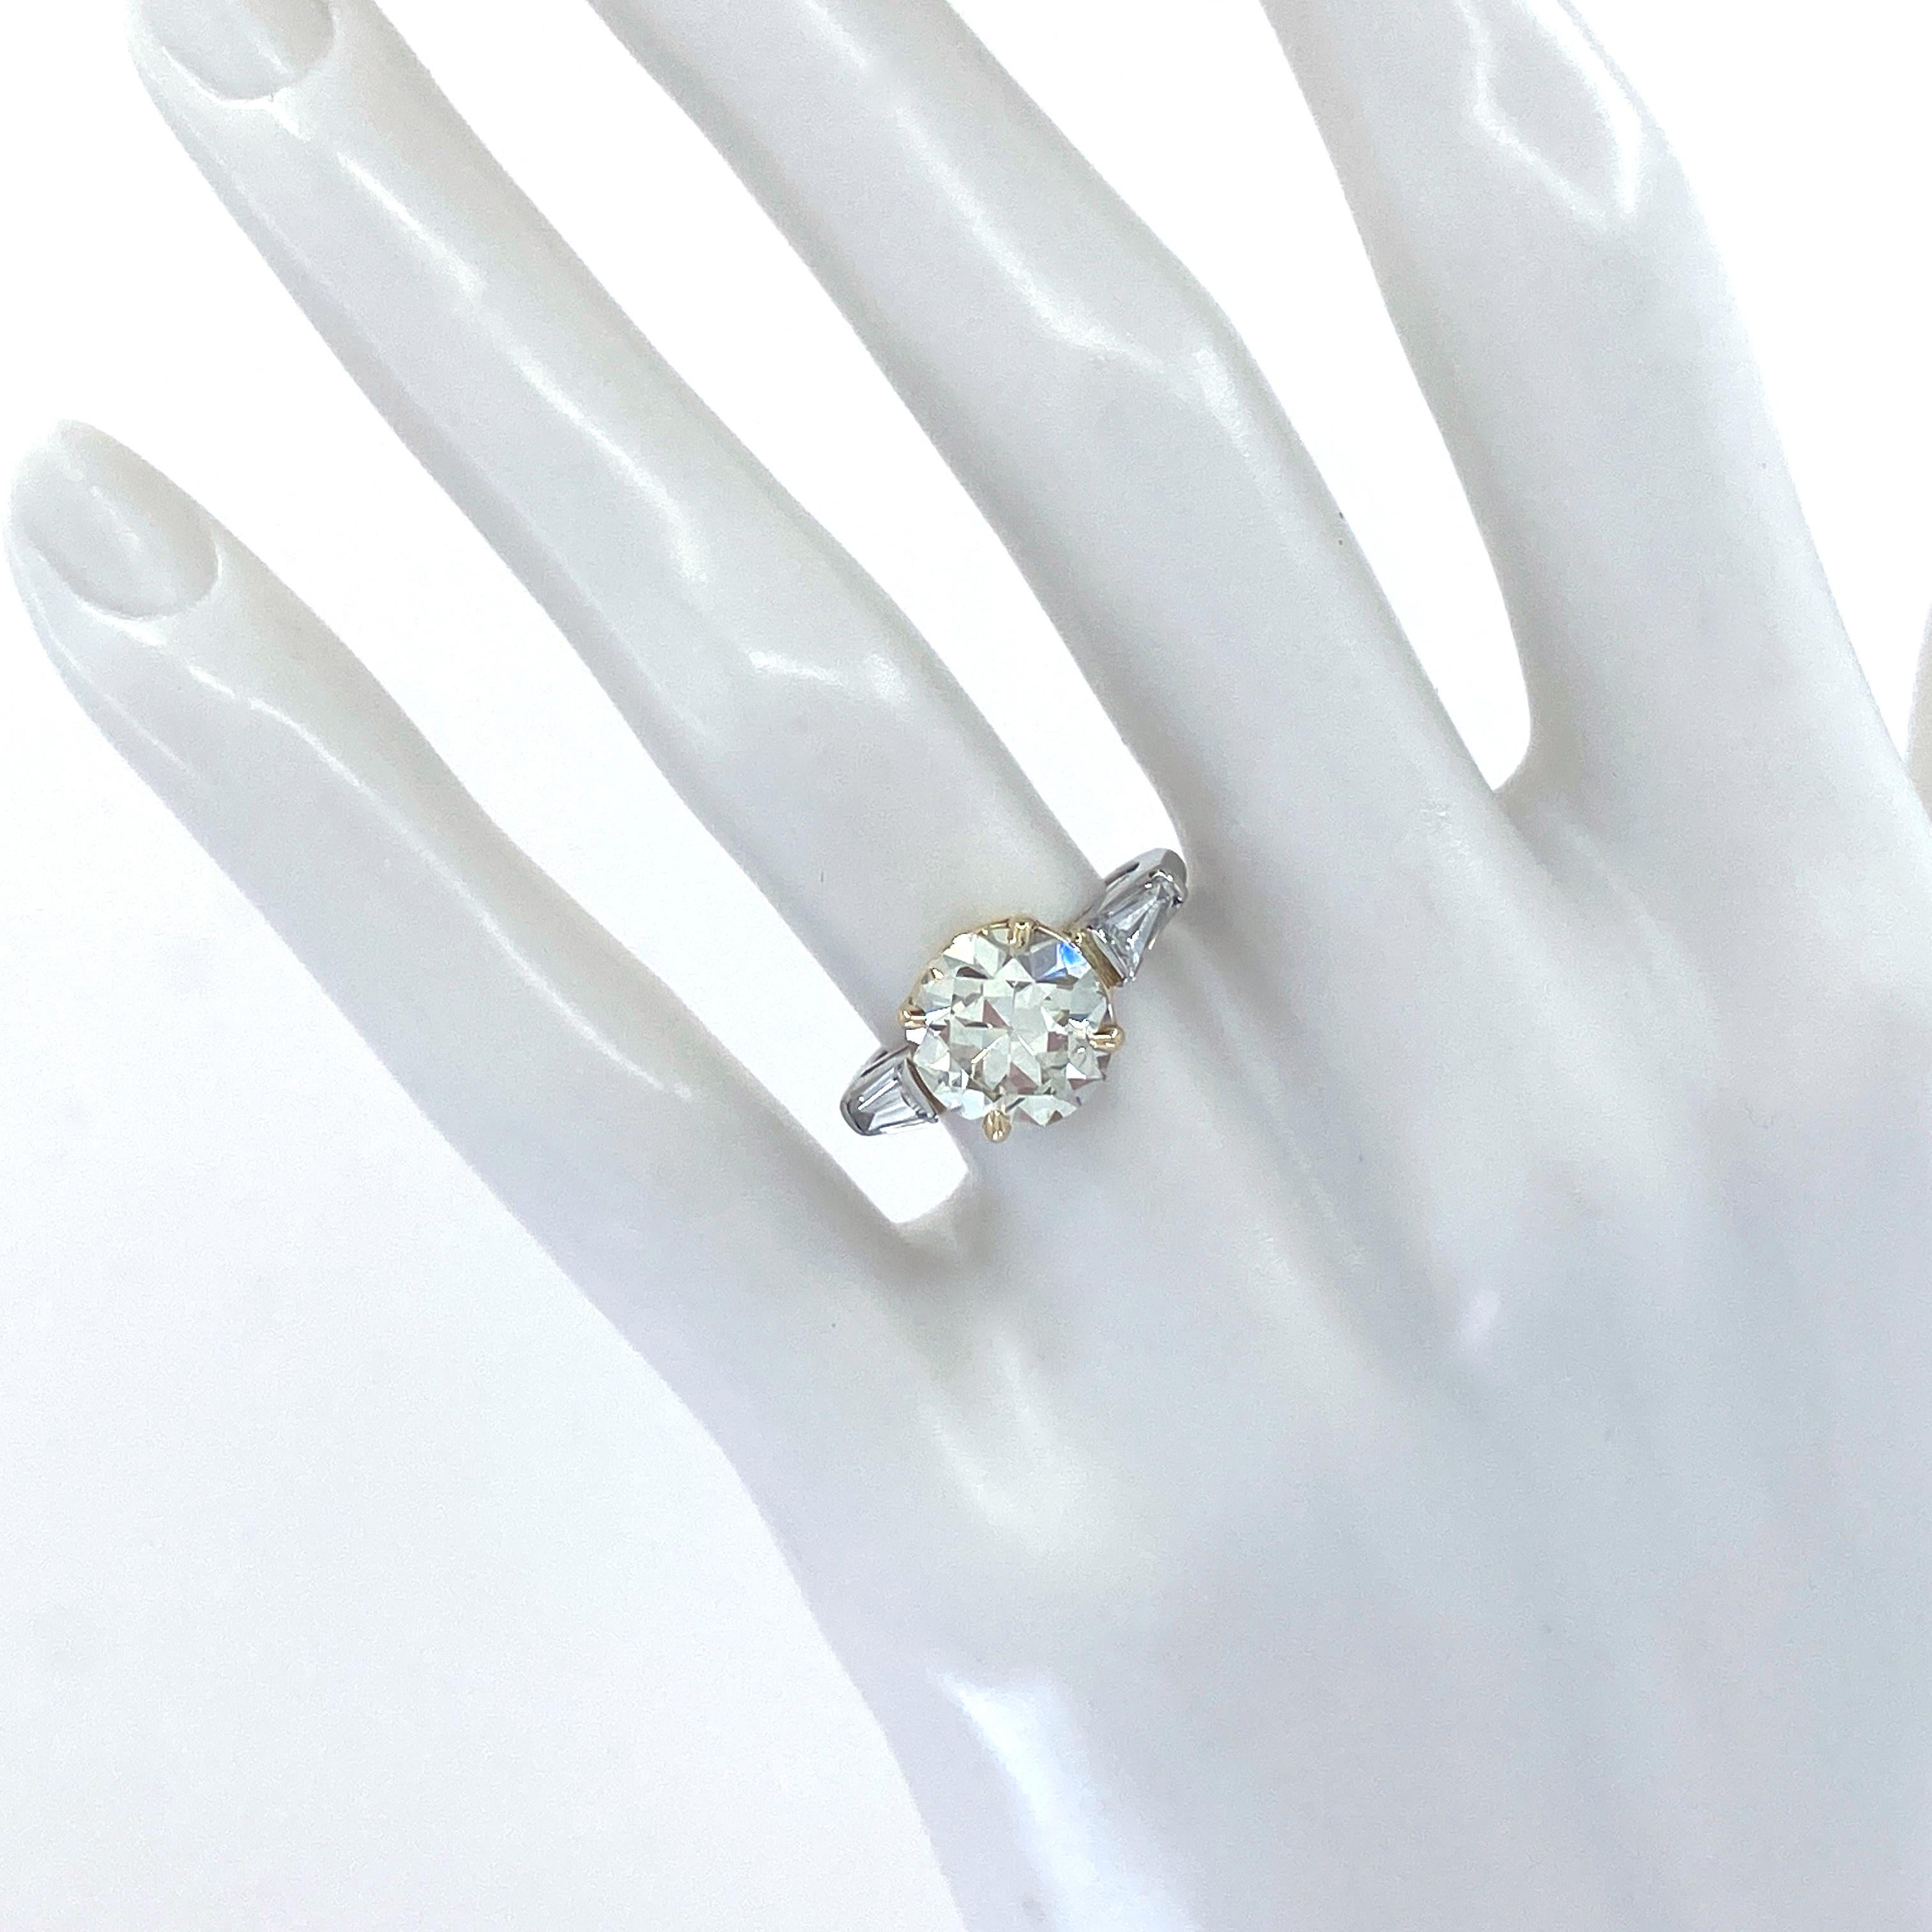 Certified 3.16 Carat Transitional Cut Diamond in Platinum & Gold 3-Stone Ring 3